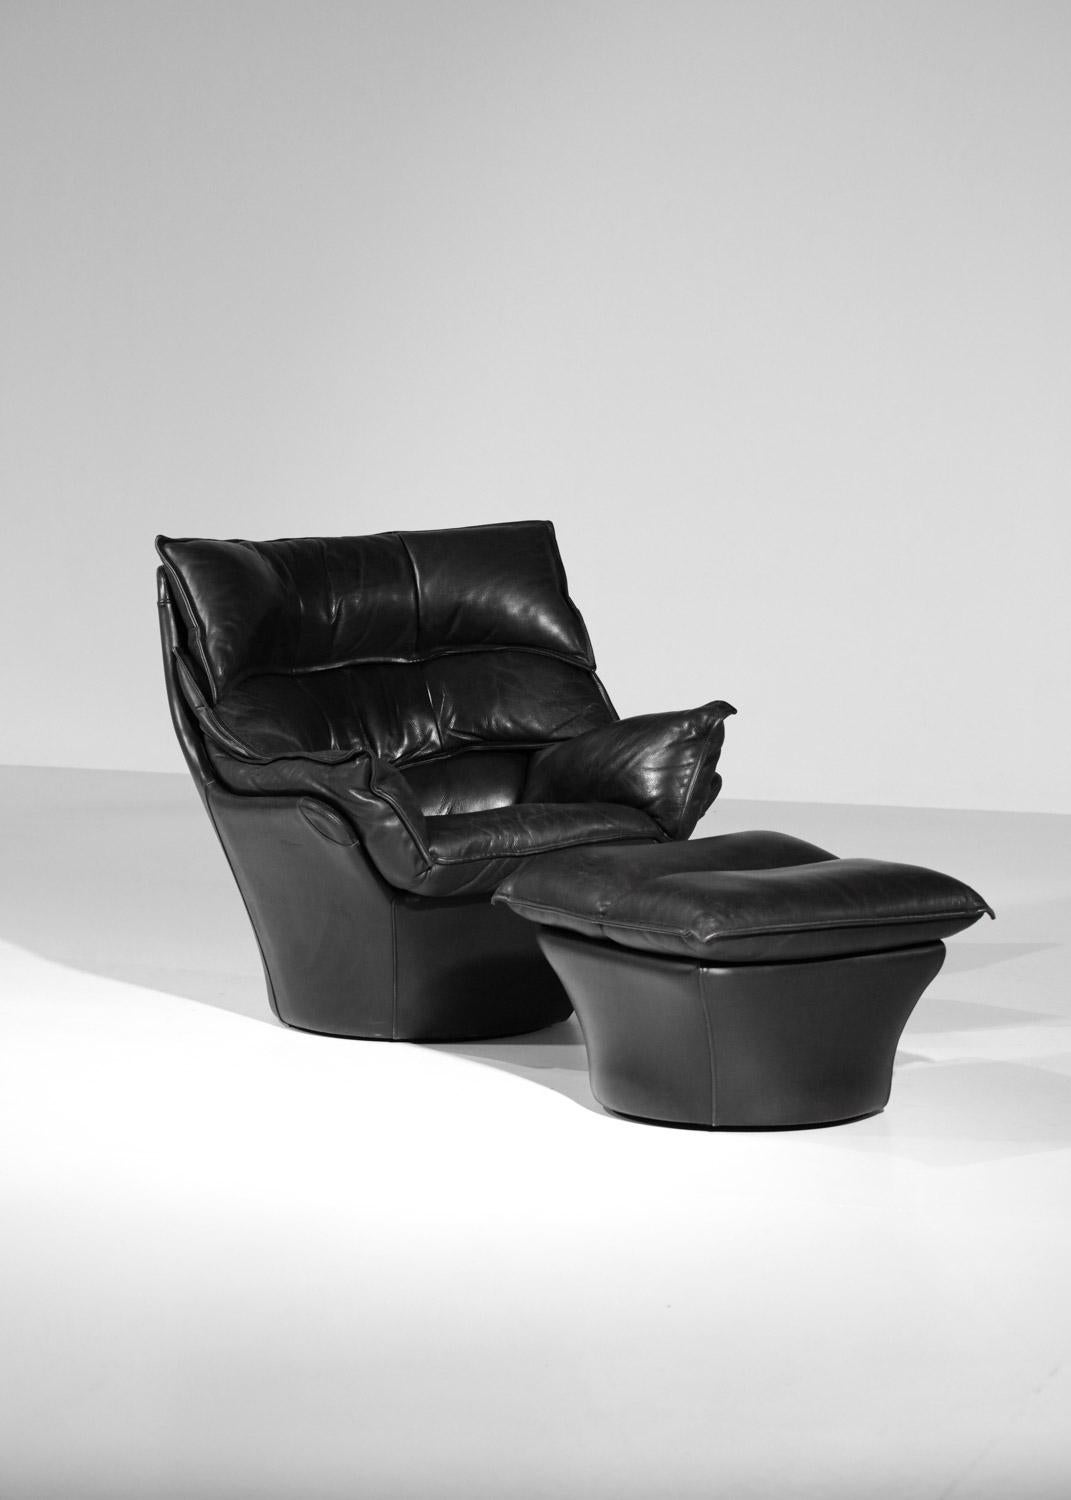 Großer Sessel und Fußstütze aus schwarzem Leder Bernard Massot, Bernard Massot, Jahre 70/80 (Ende des 20. Jahrhunderts)